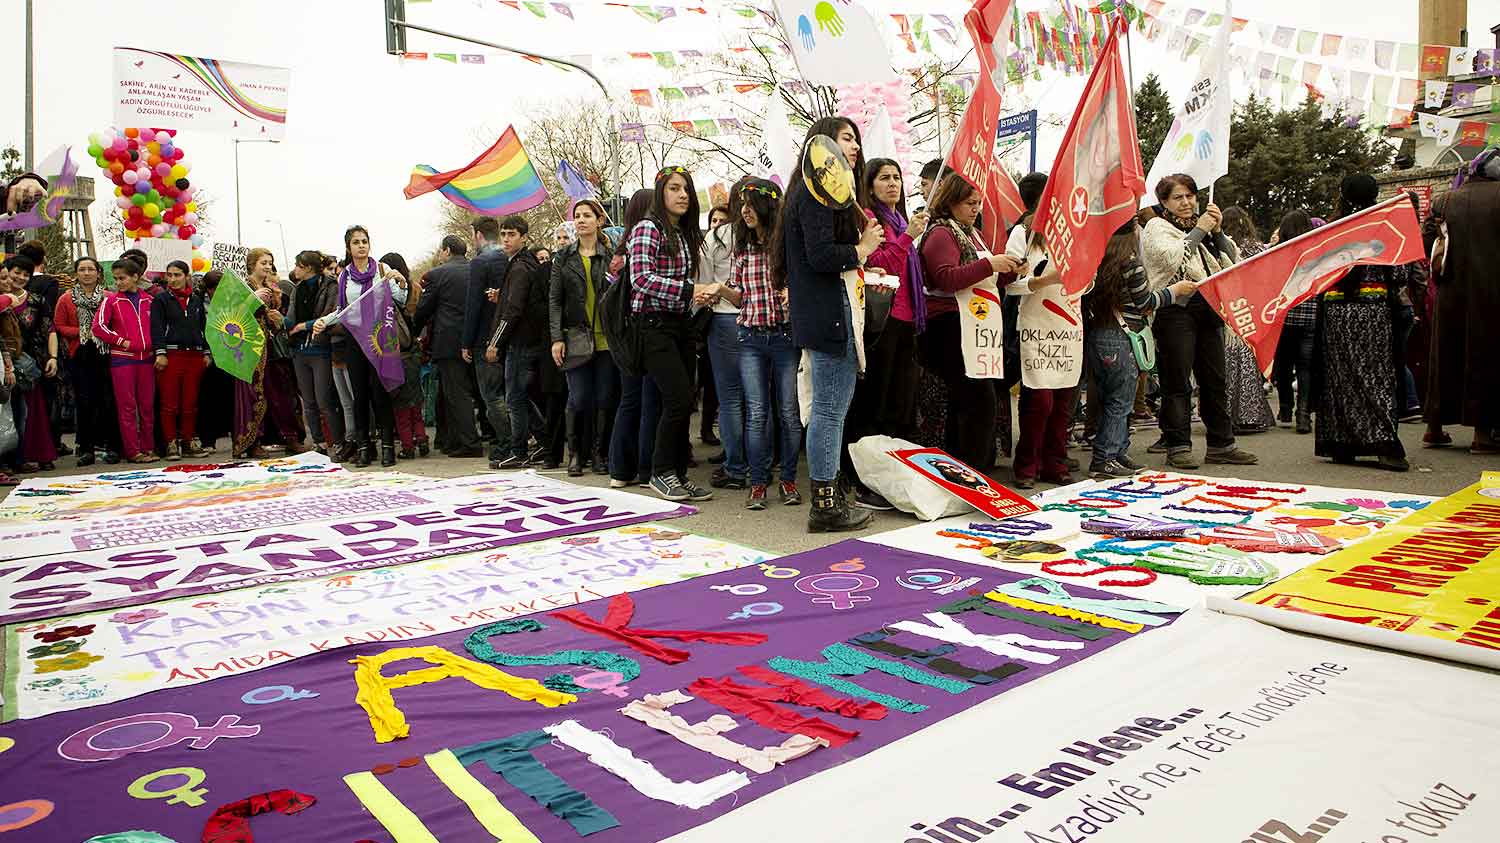 basauri mujeres marcha mundial 2015 kurdistan